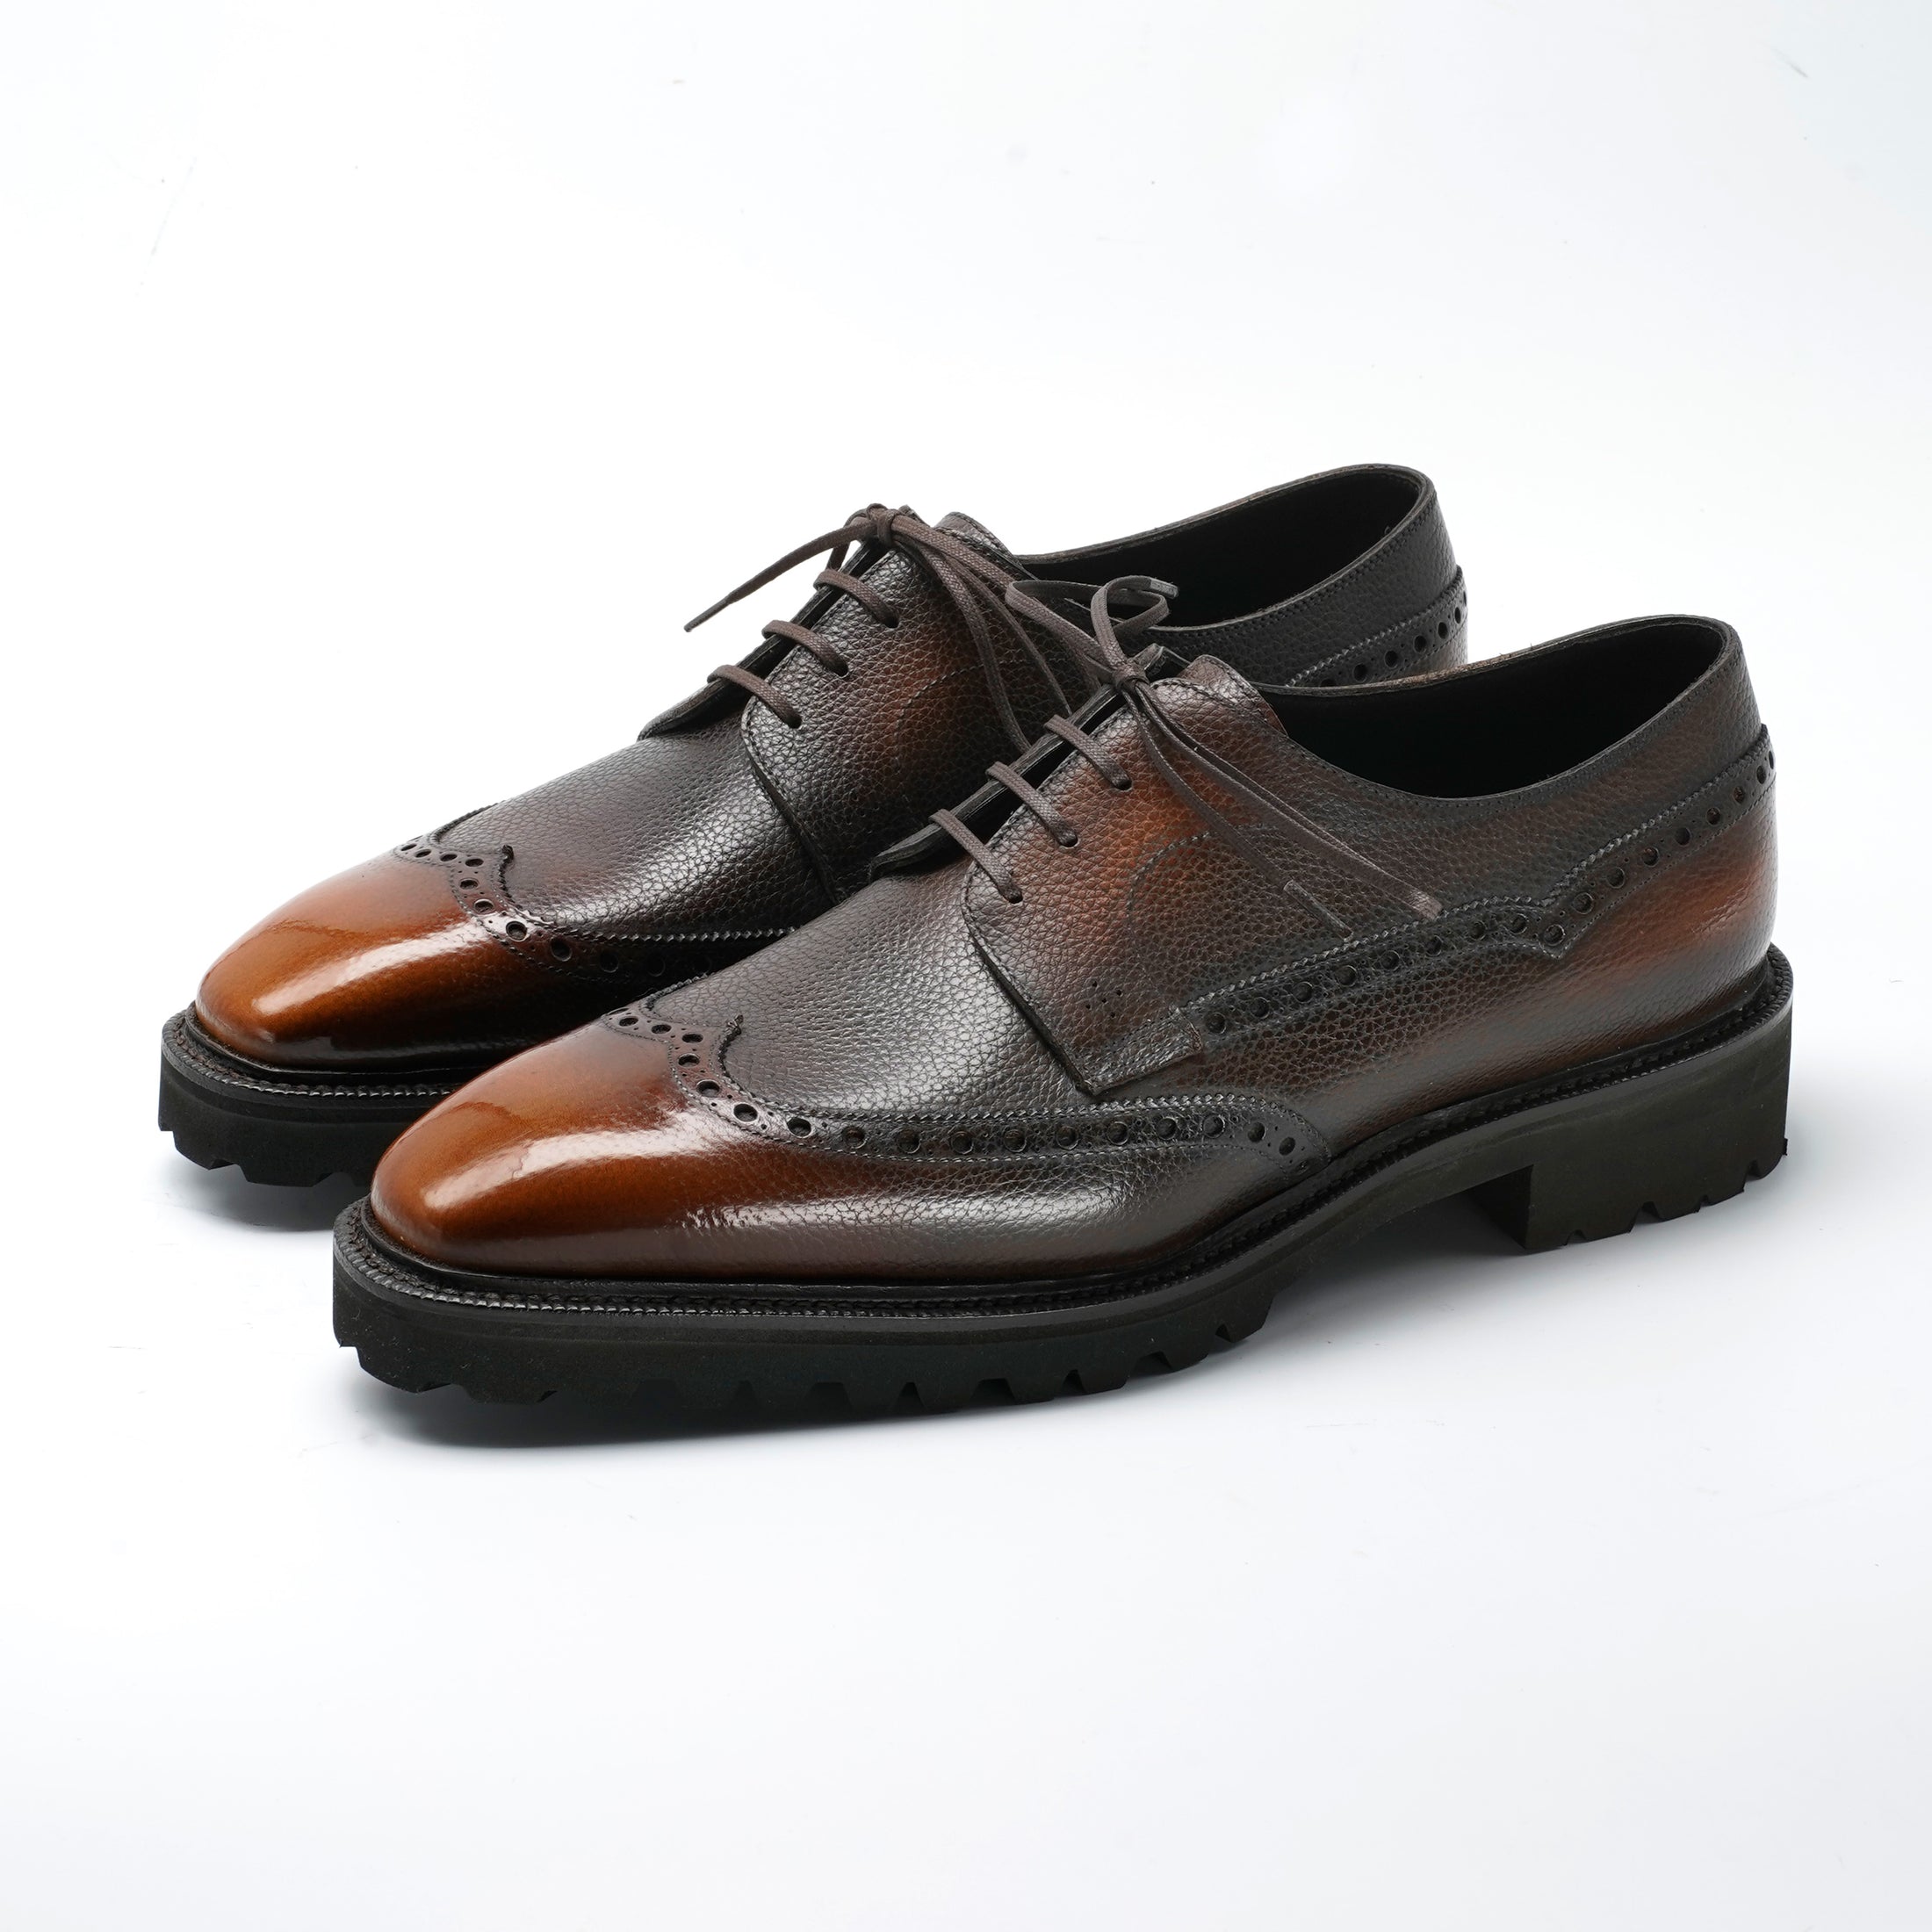 Coltrane Wingtip Balmoral Derby | Norman Vilalta Men's Derby Shoes